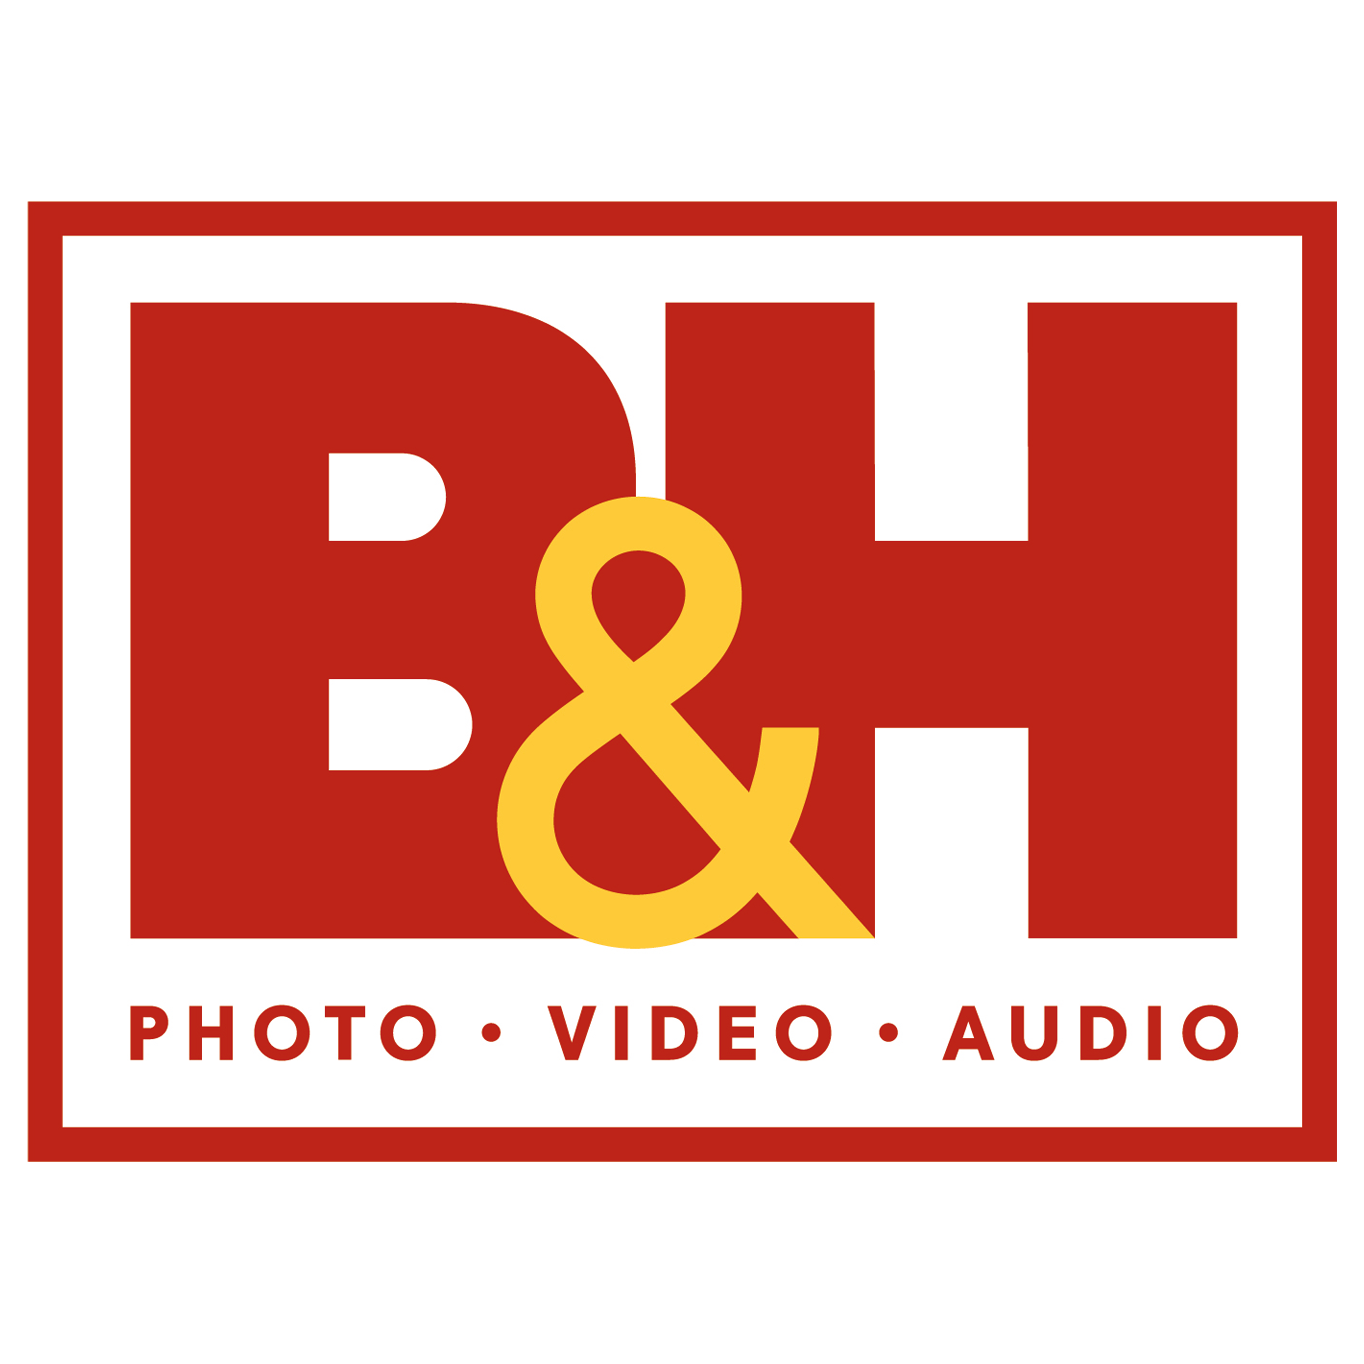 B&H Coupons & Promo Codes